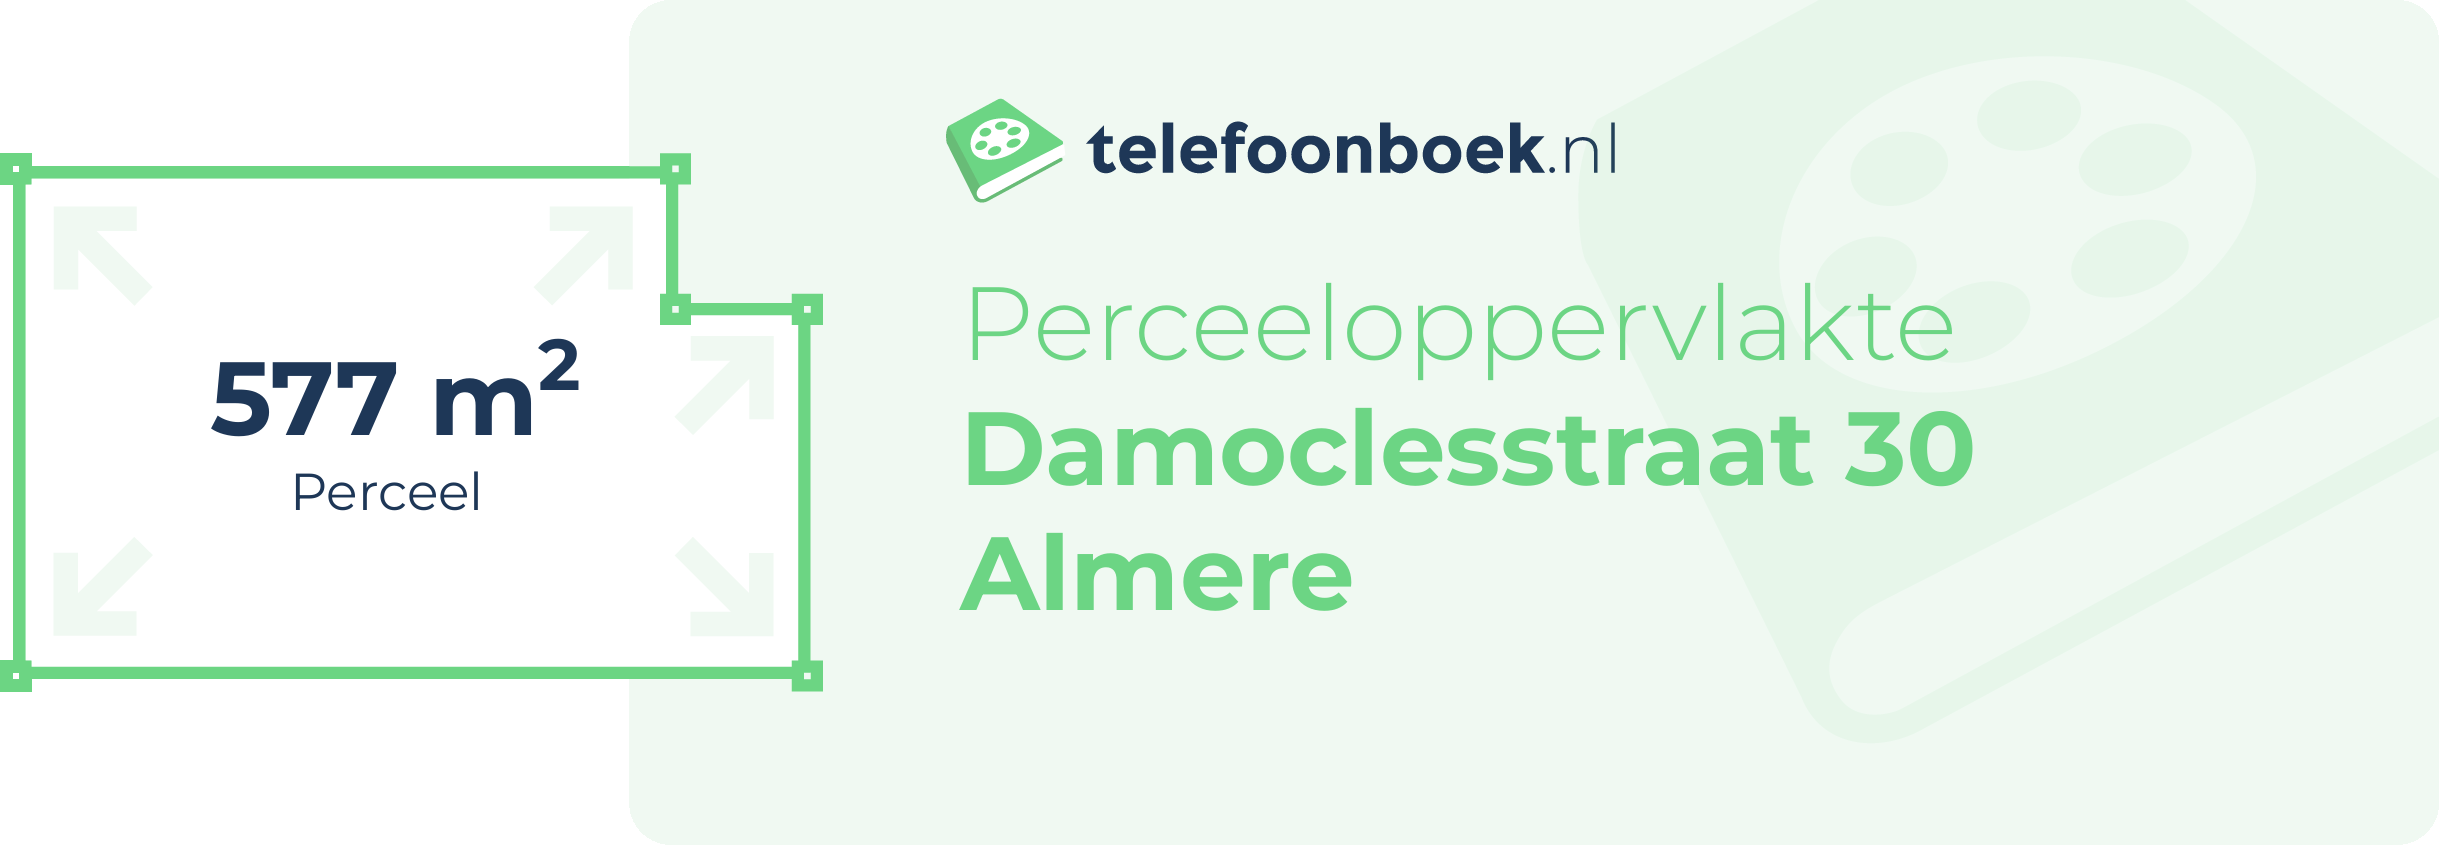 Perceeloppervlakte Damoclesstraat 30 Almere